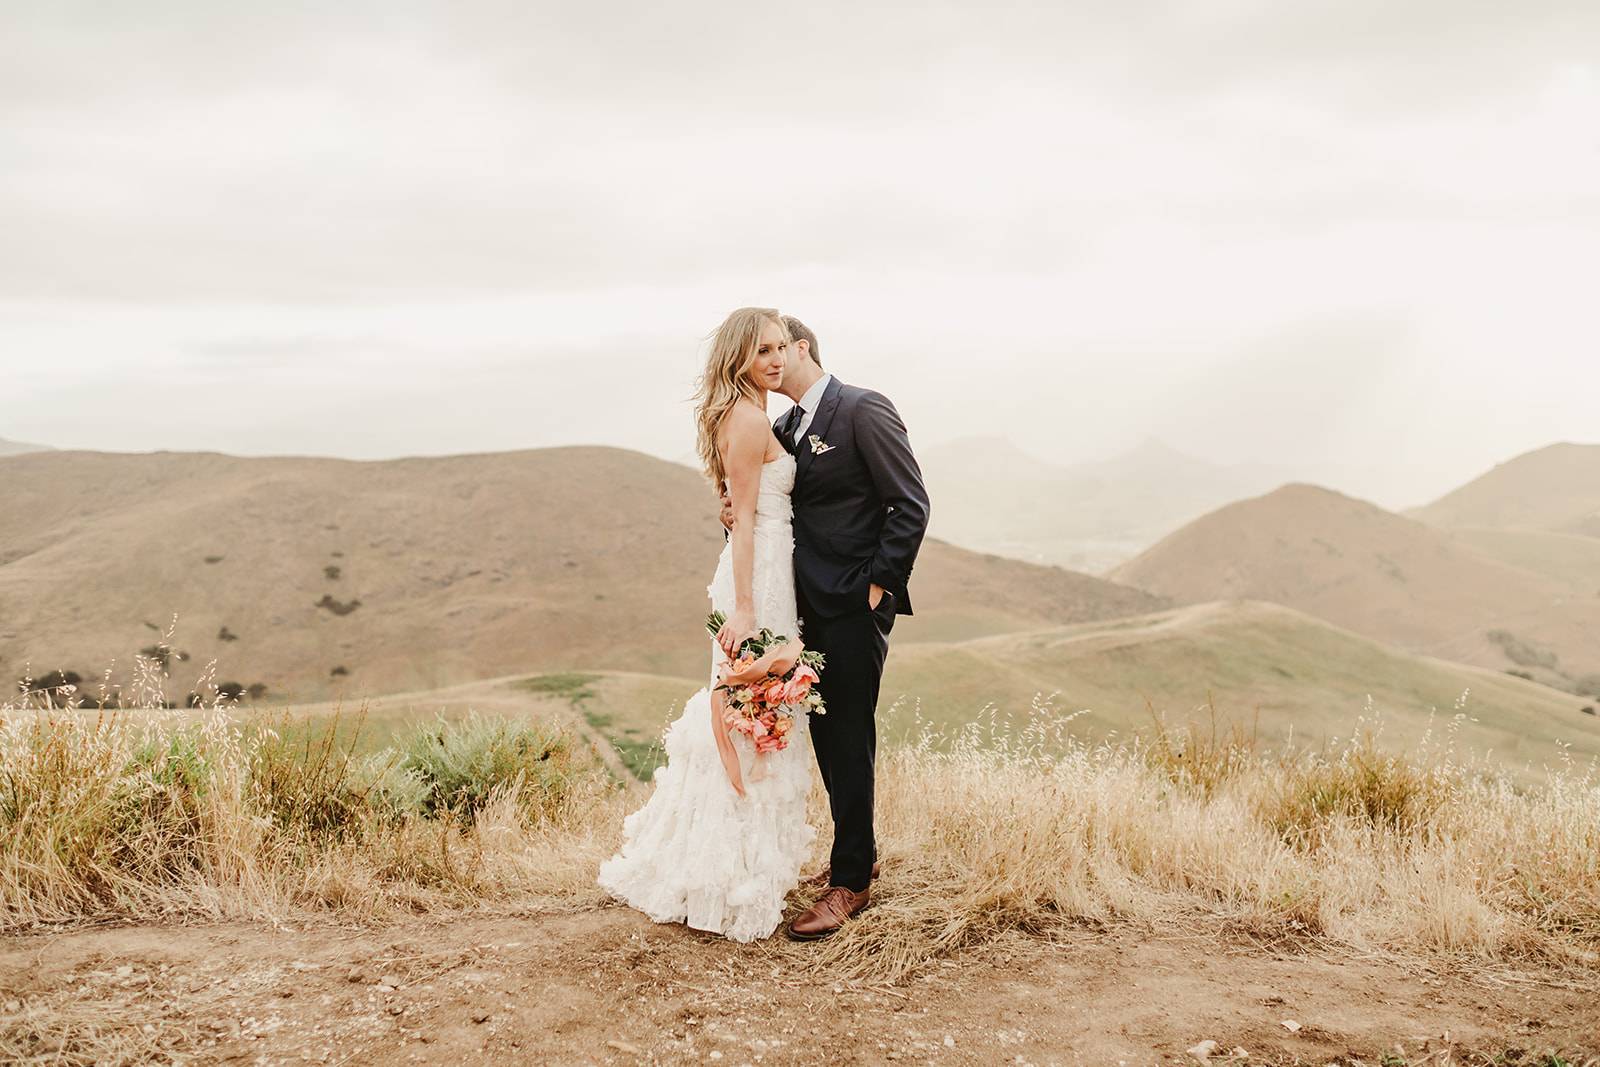 Wedding Couple Shoot with Bright Florals at Rustic La Cuesta Ranch | The Wedding Standard